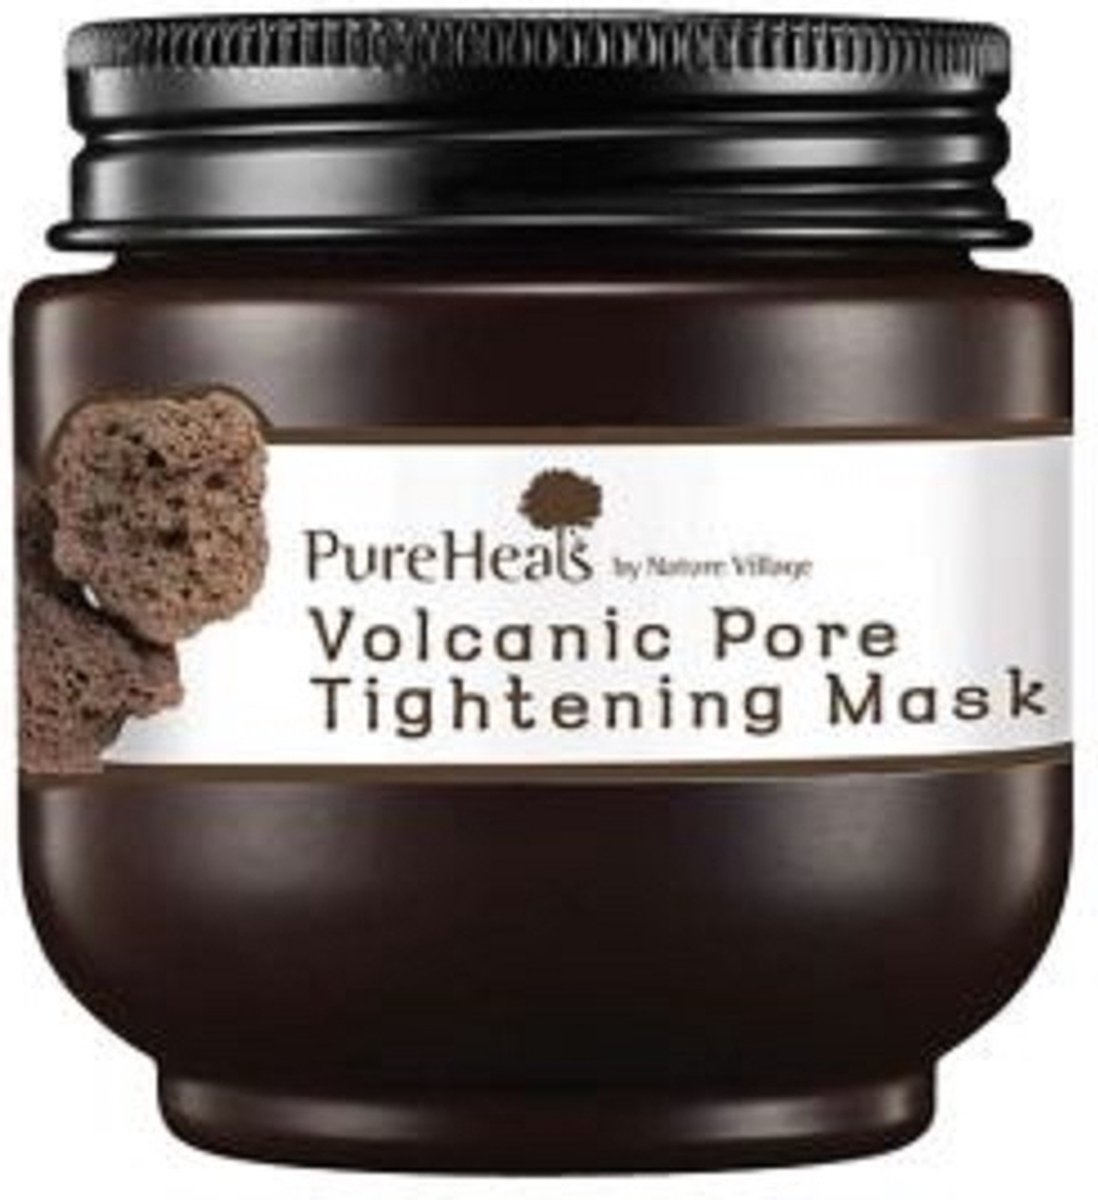 PureHeal's Volcanic Pore Tightening